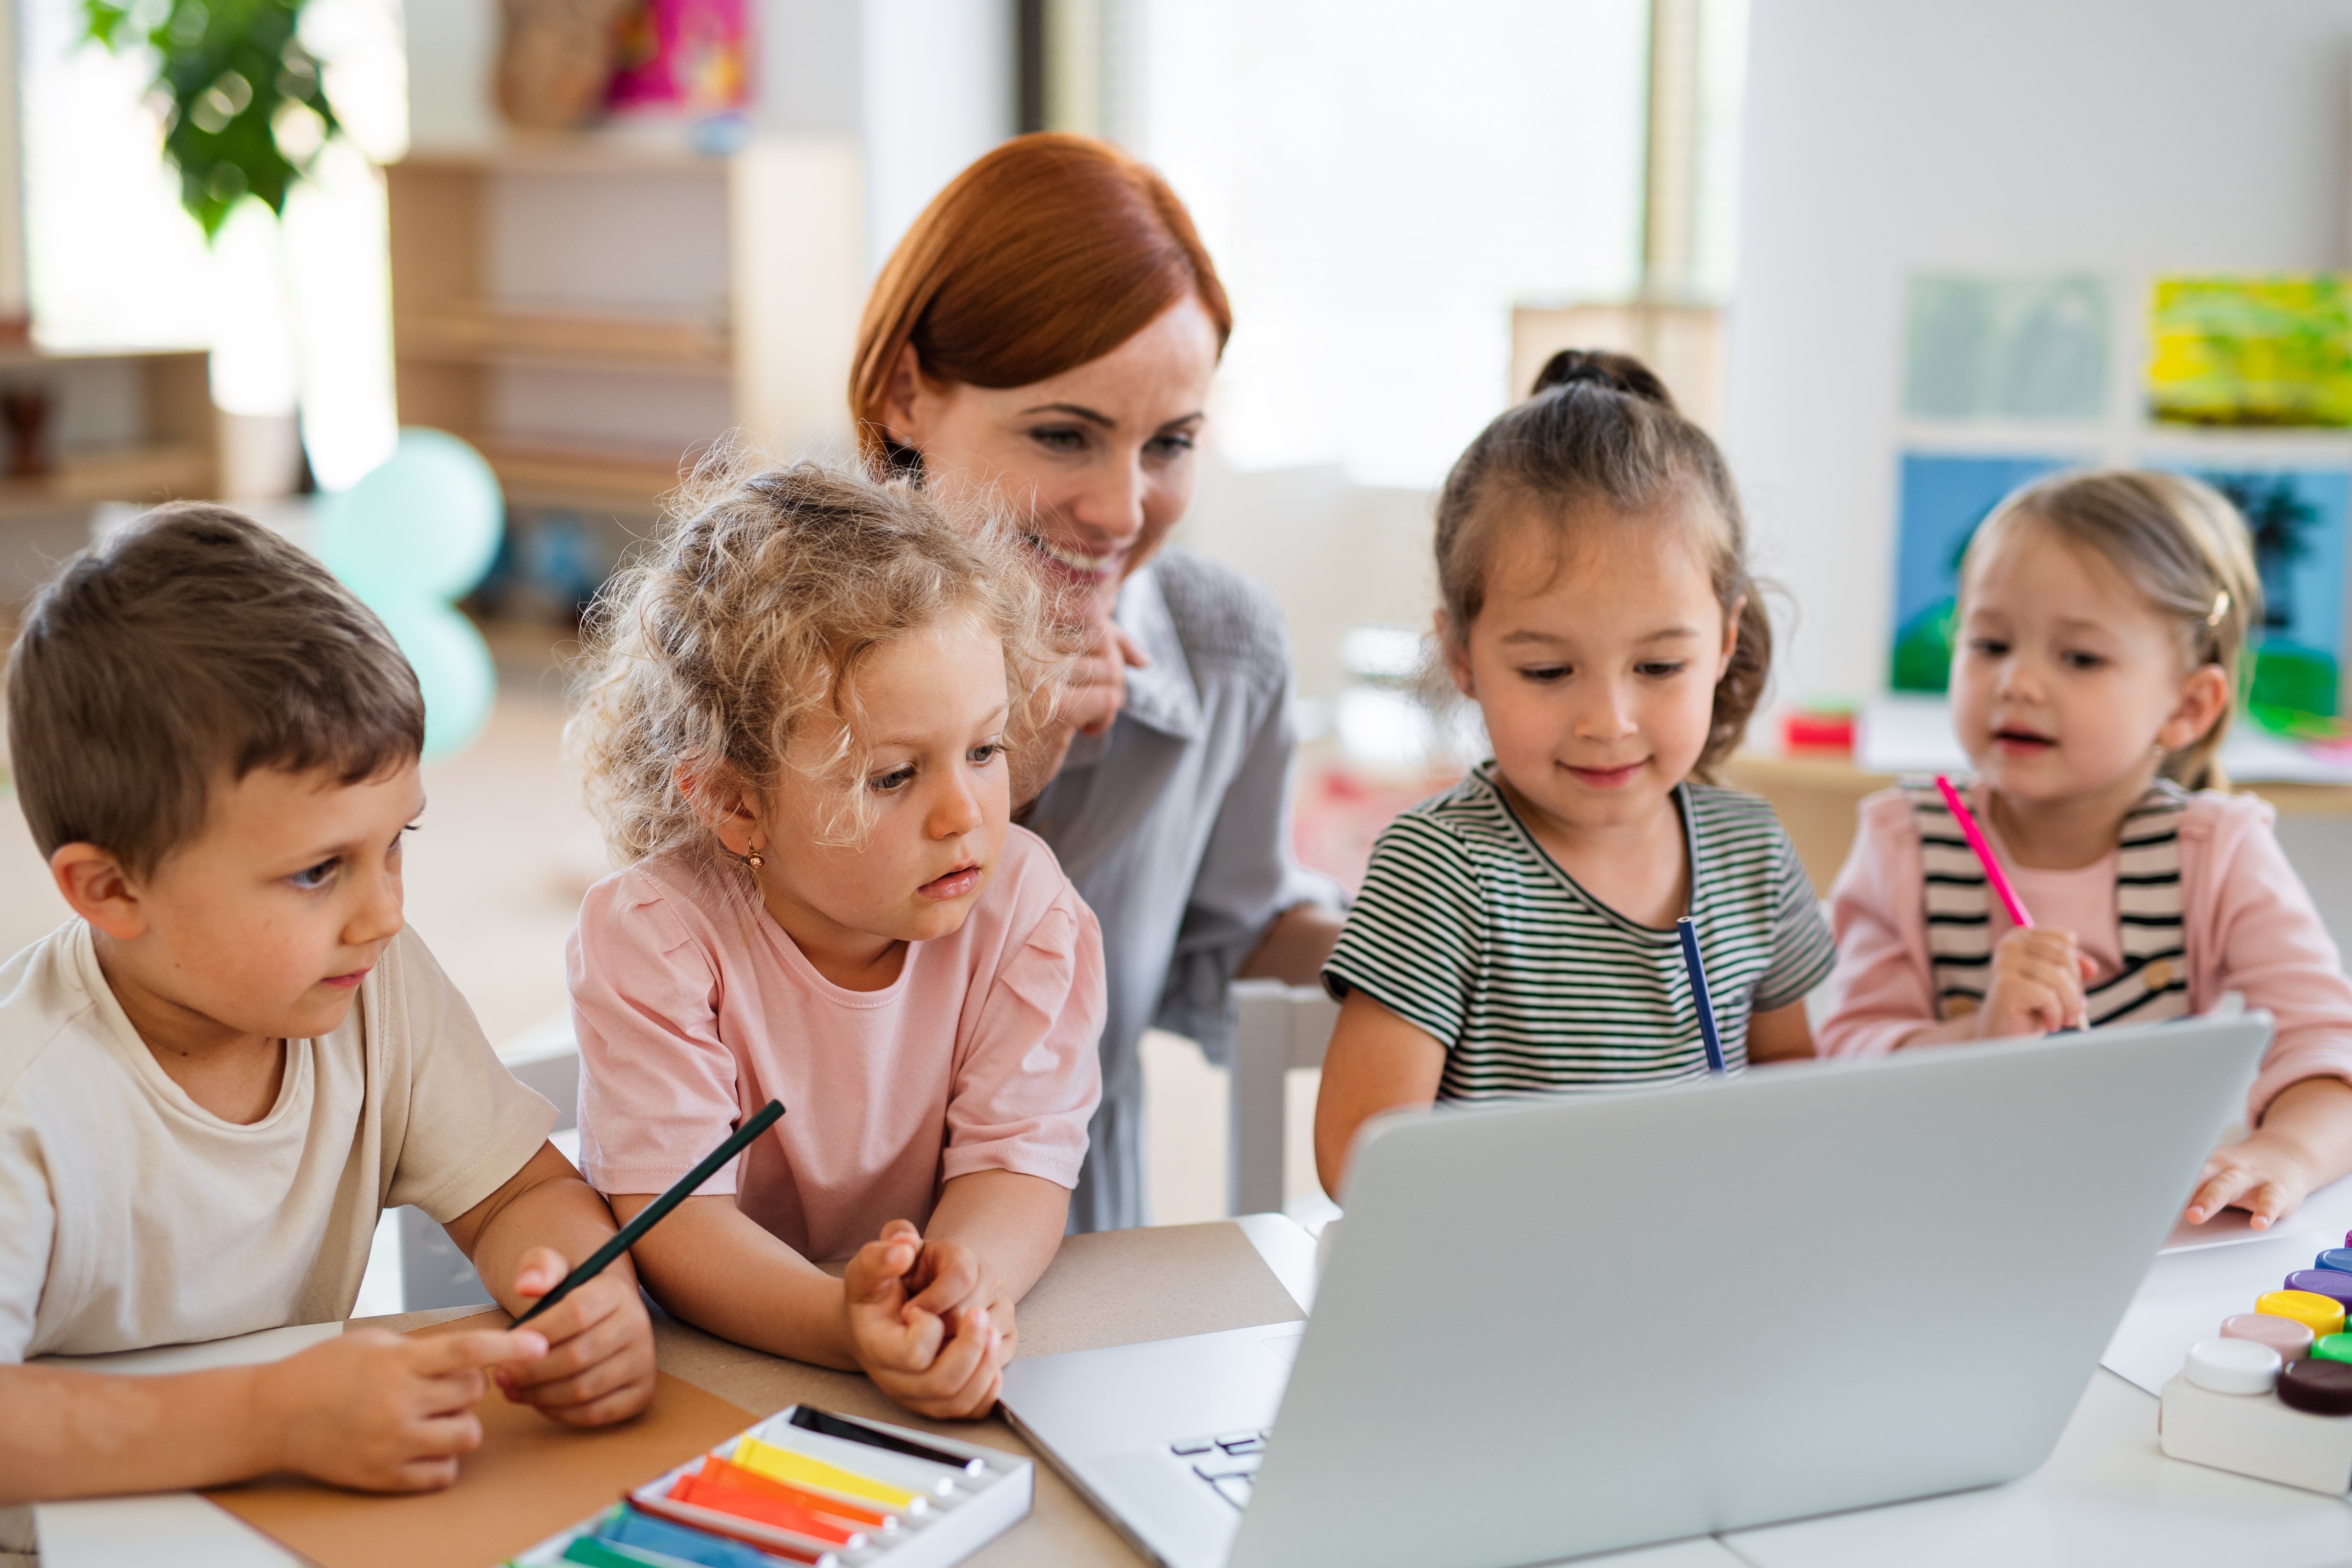 A group of preschool children with teacher in classroom using laptop